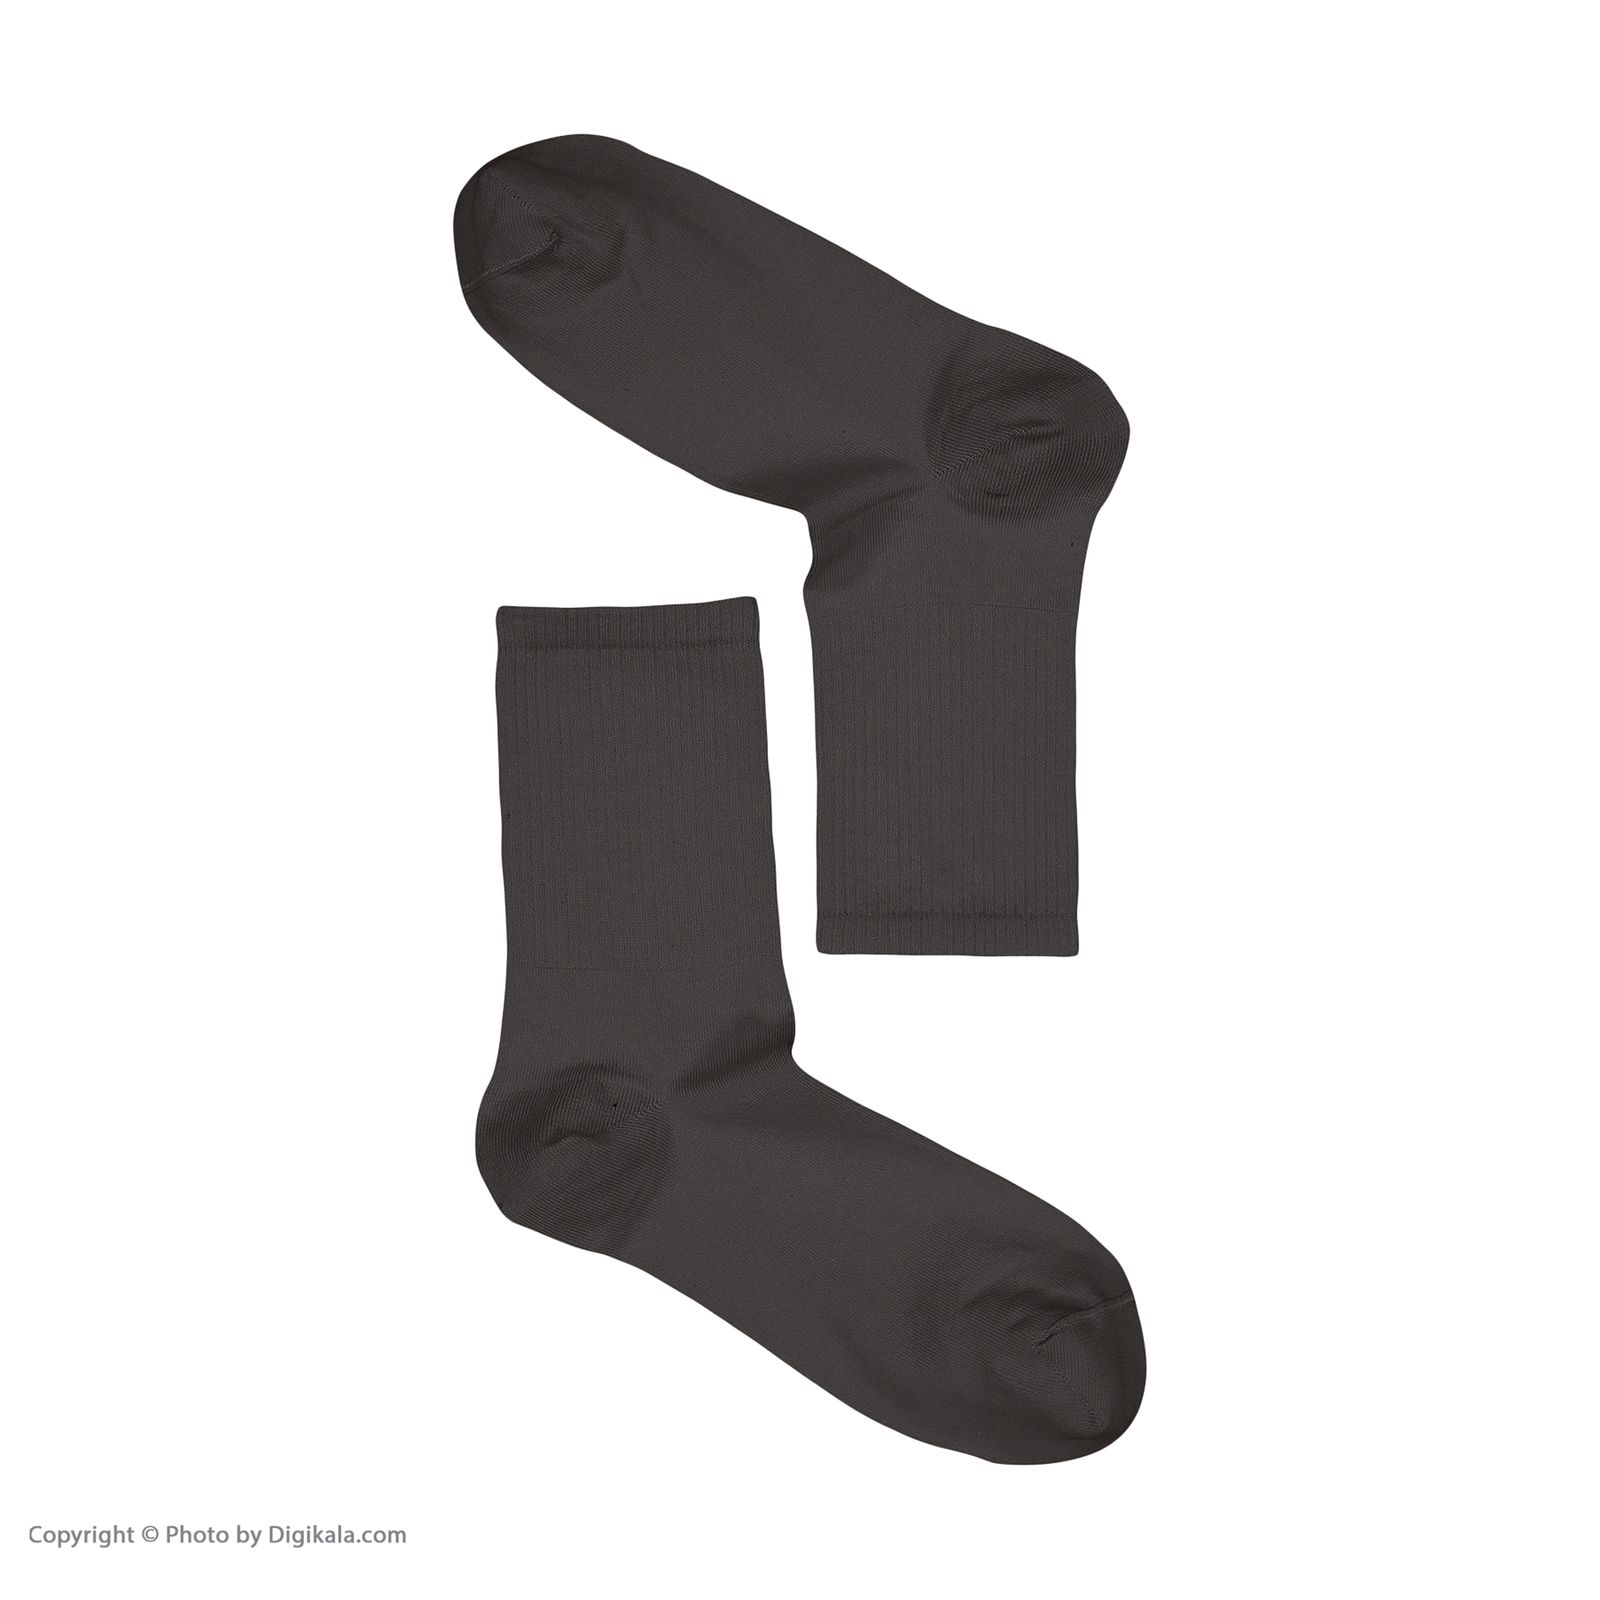 جوراب مردانه سیکس زیرو ناین مدل 1107-92 بسته 3 عددی -  - 4